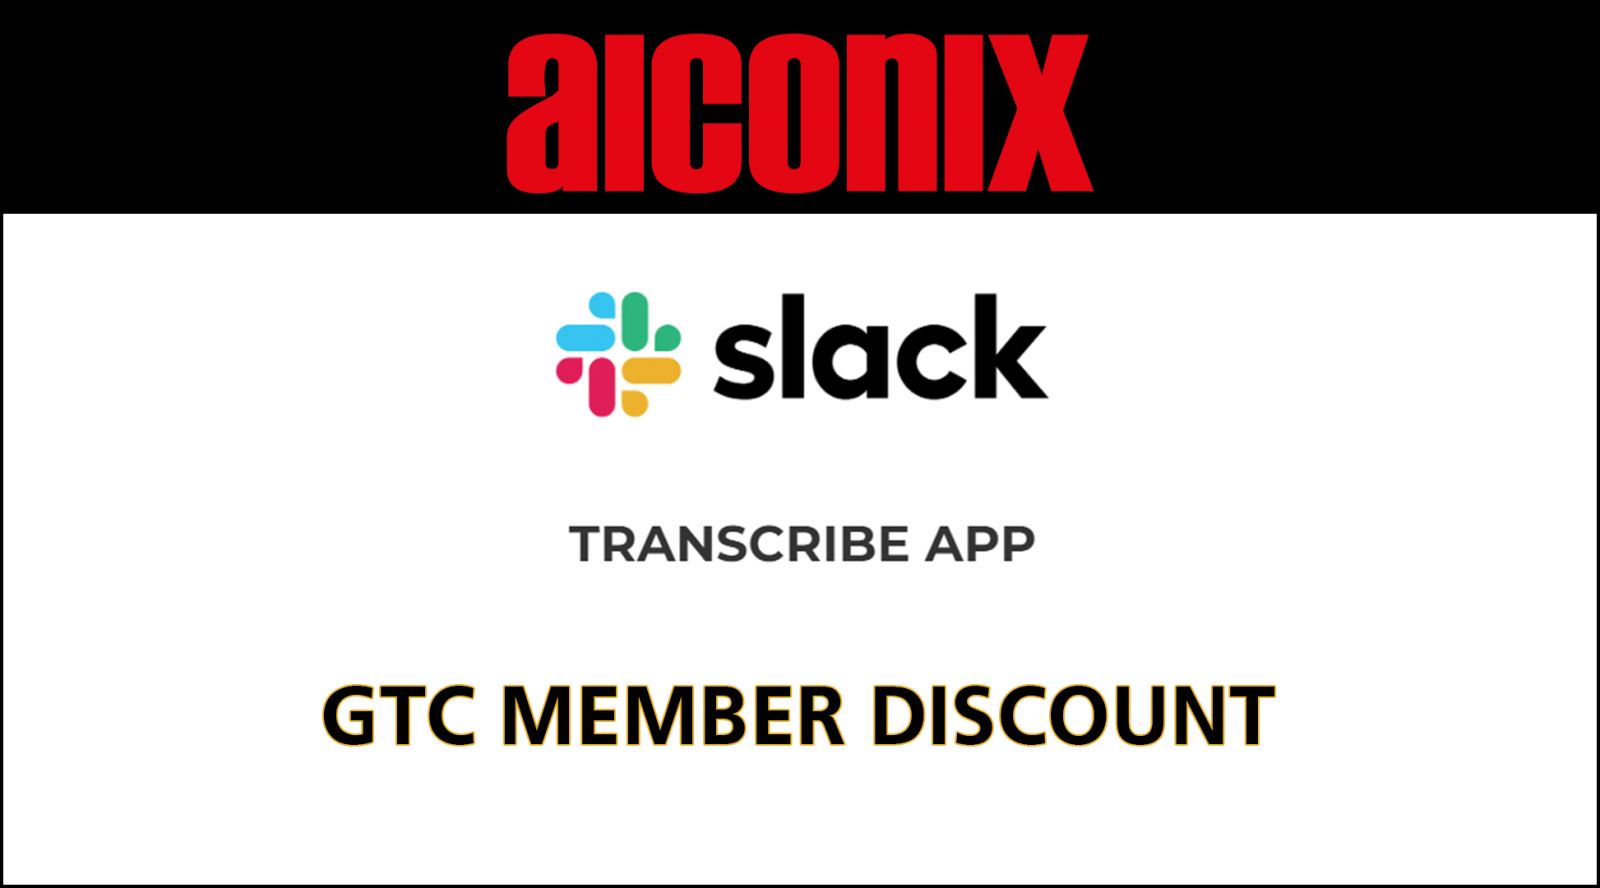 aiconix offering GTC Member discount